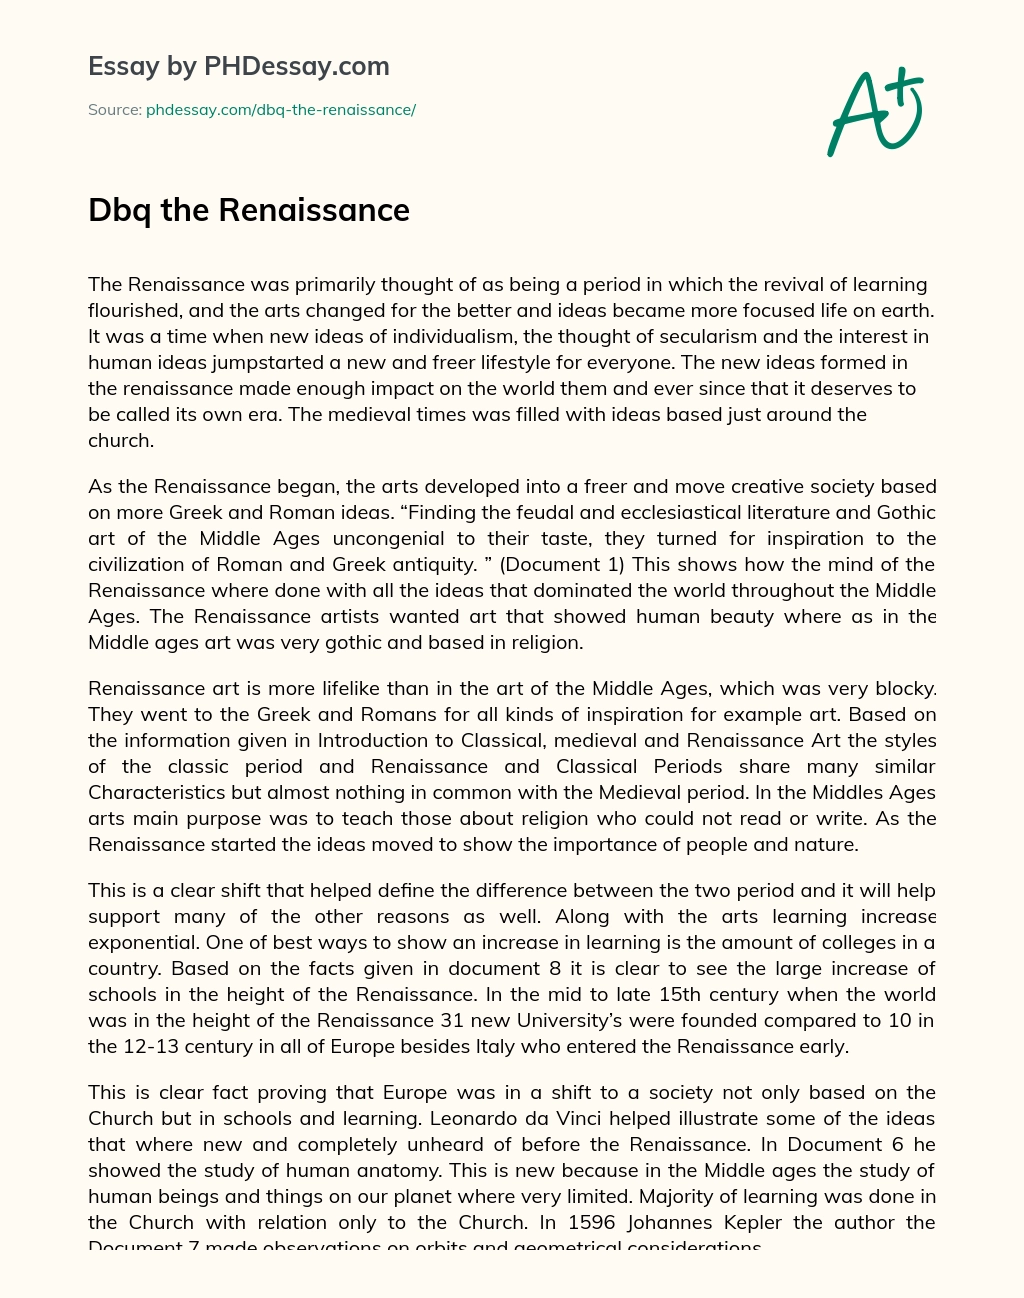 Dbq the Renaissance essay